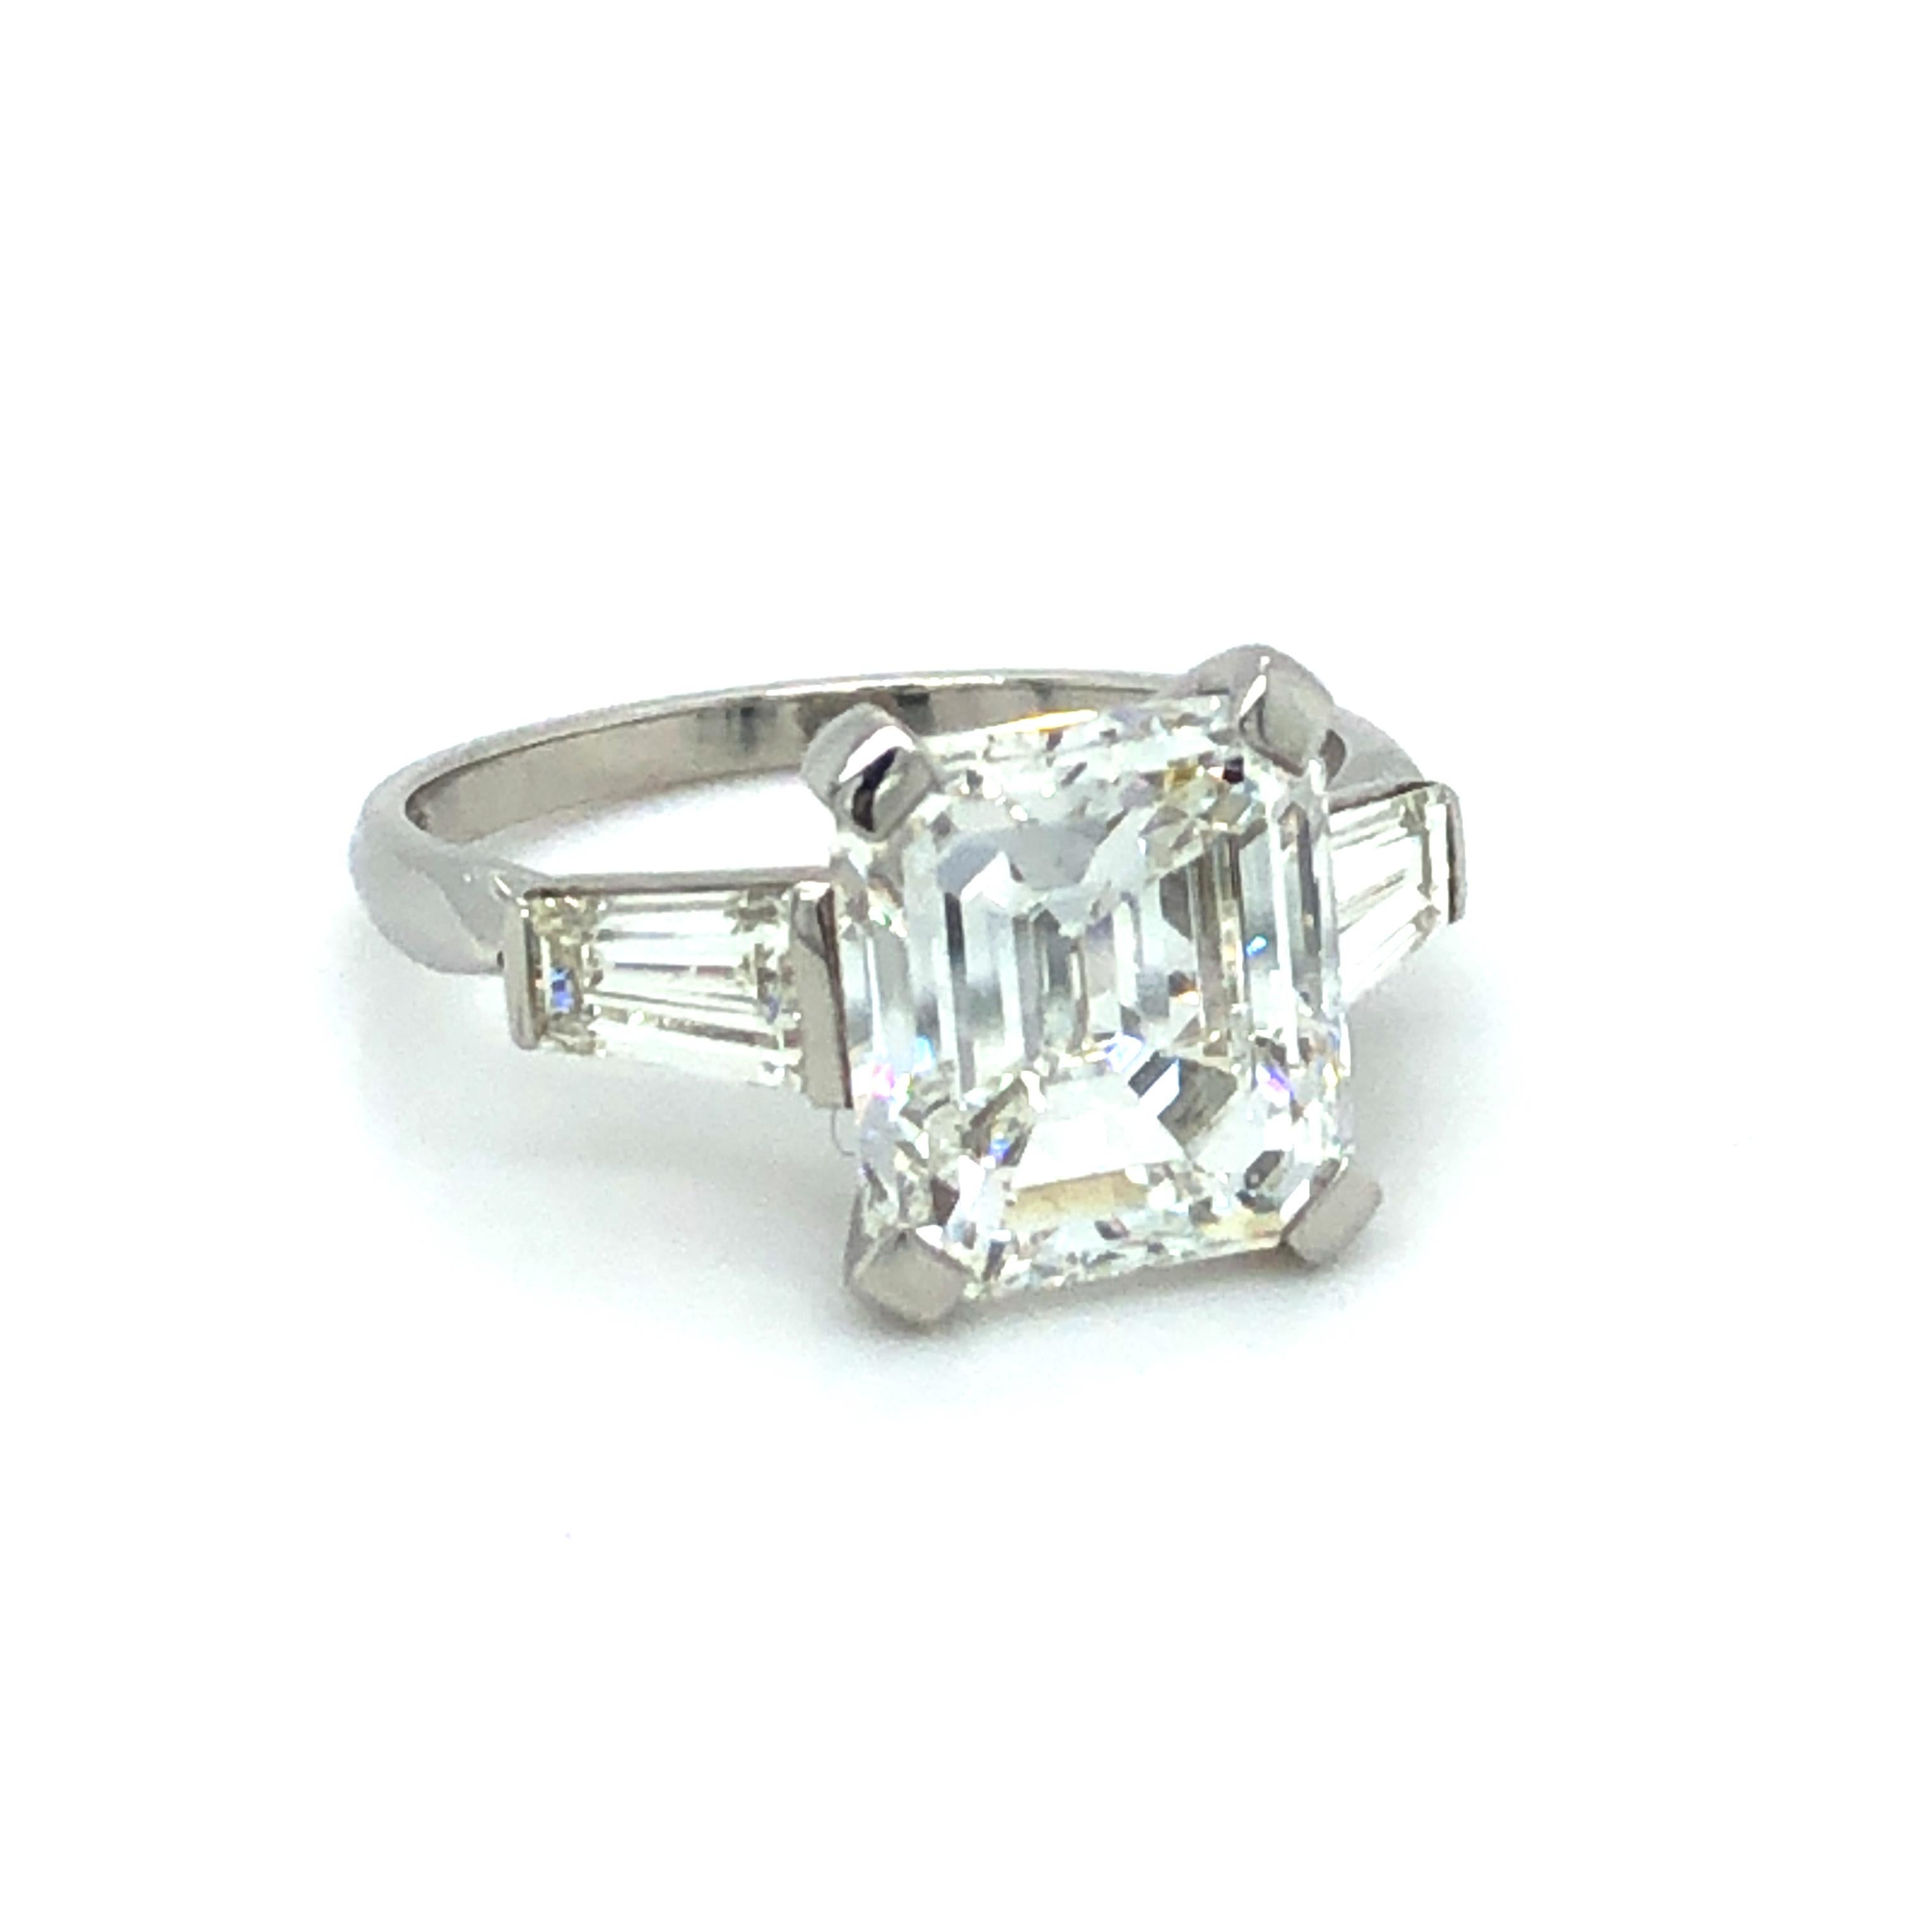 Contemporary GIA Certified 4.19 Carat Emerald Cut Diamond Ring in Platinum 950